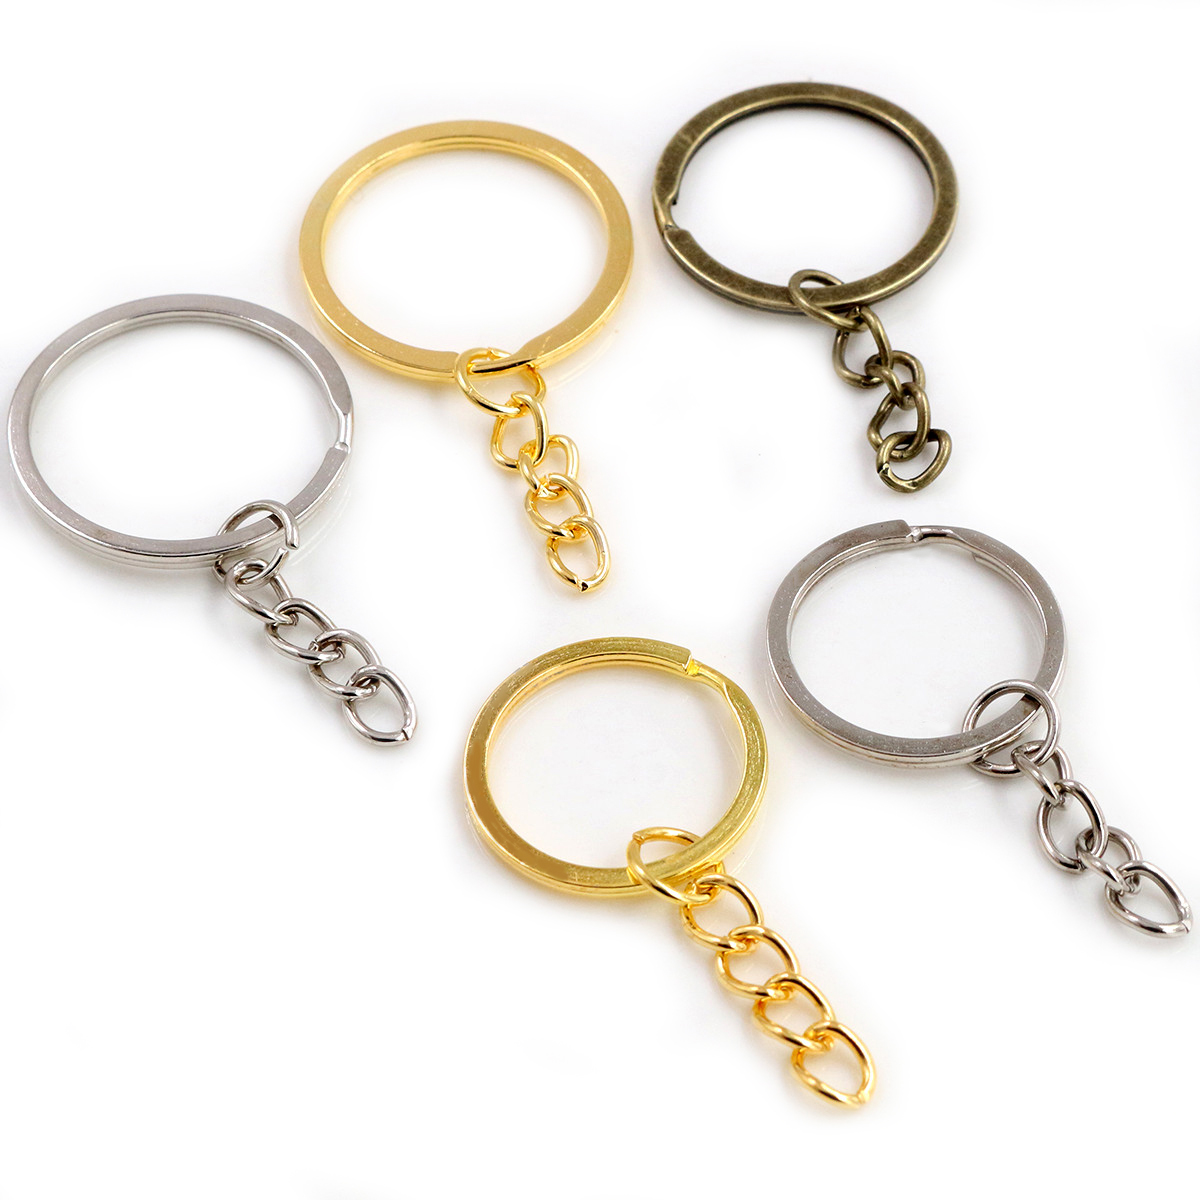 20pcs/lot Metal Key Rings Key Chains Antique Bronze Gold Rhodium